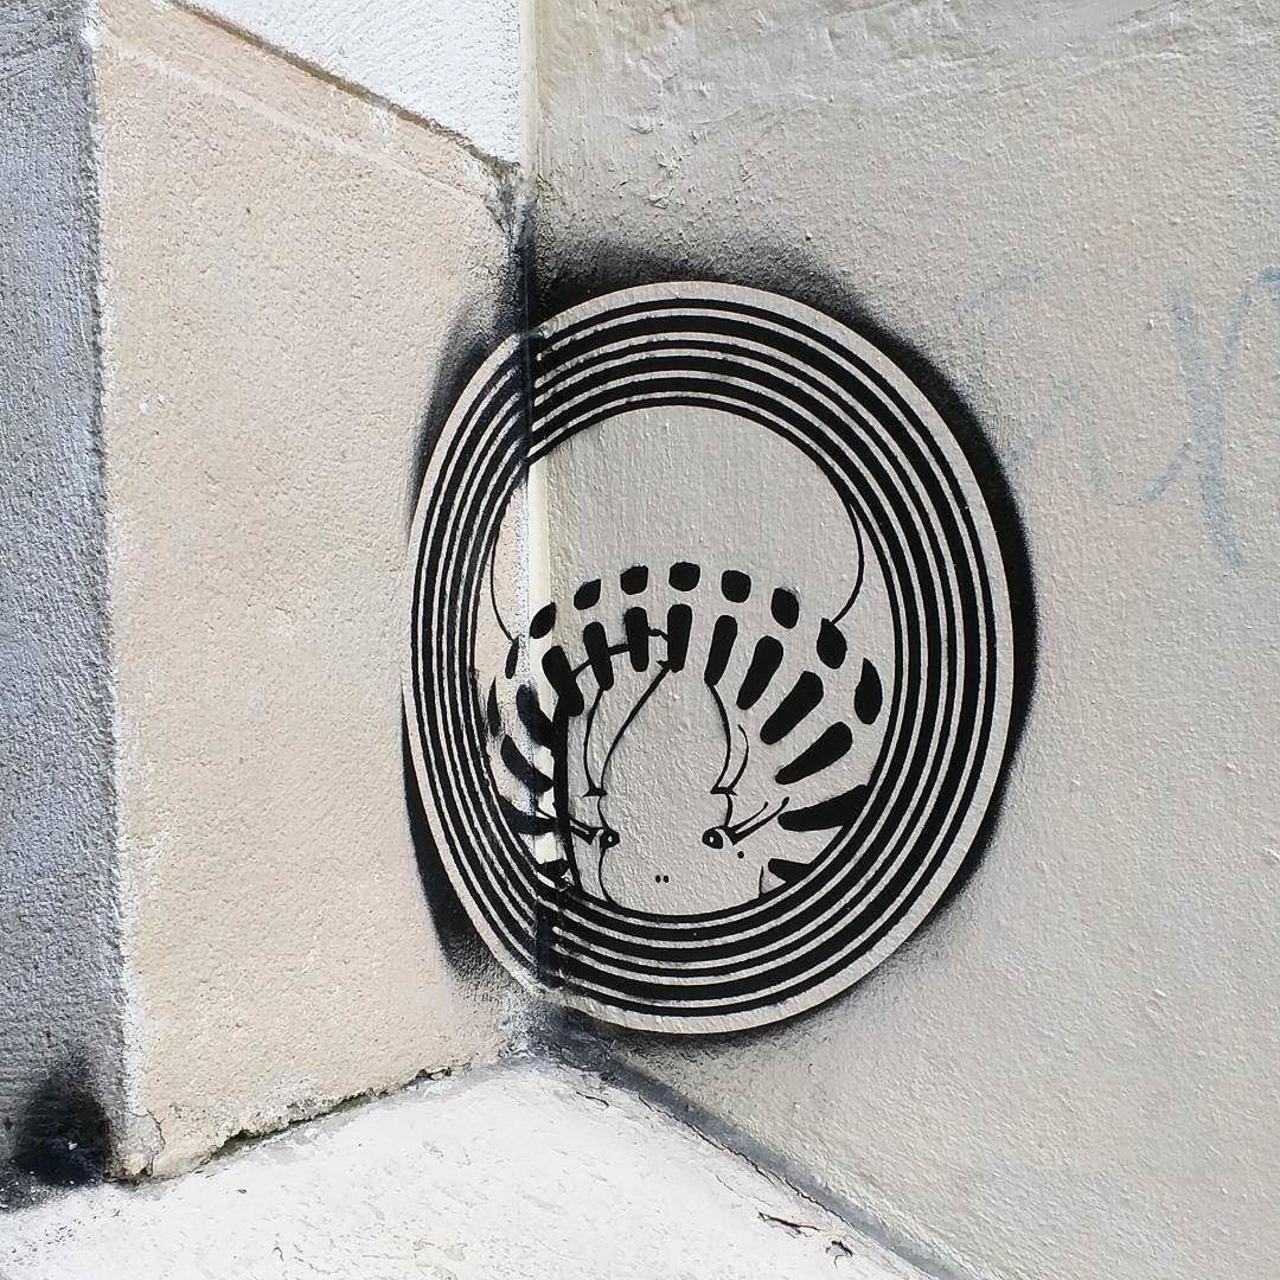 #Paris #graffiti photo by @alphaquadra http://ift.tt/1GFdVyH #StreetArt http://t.co/GTXJtQexvD